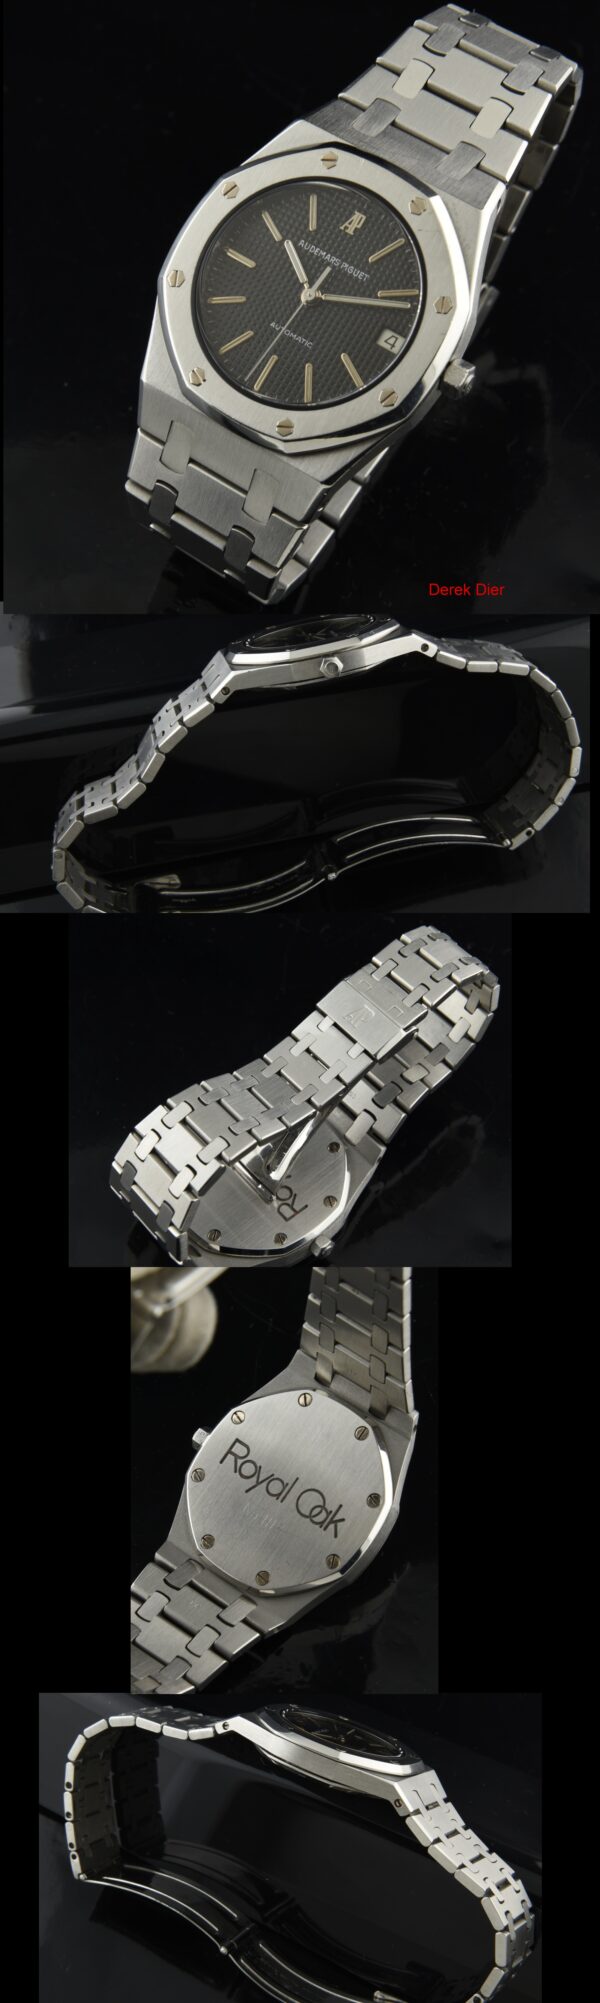 1950 Audemars Piguet Royal Oak stainless steel watch with original black dial, handset, case, bracelet, crown, and caliber 2123 movement.